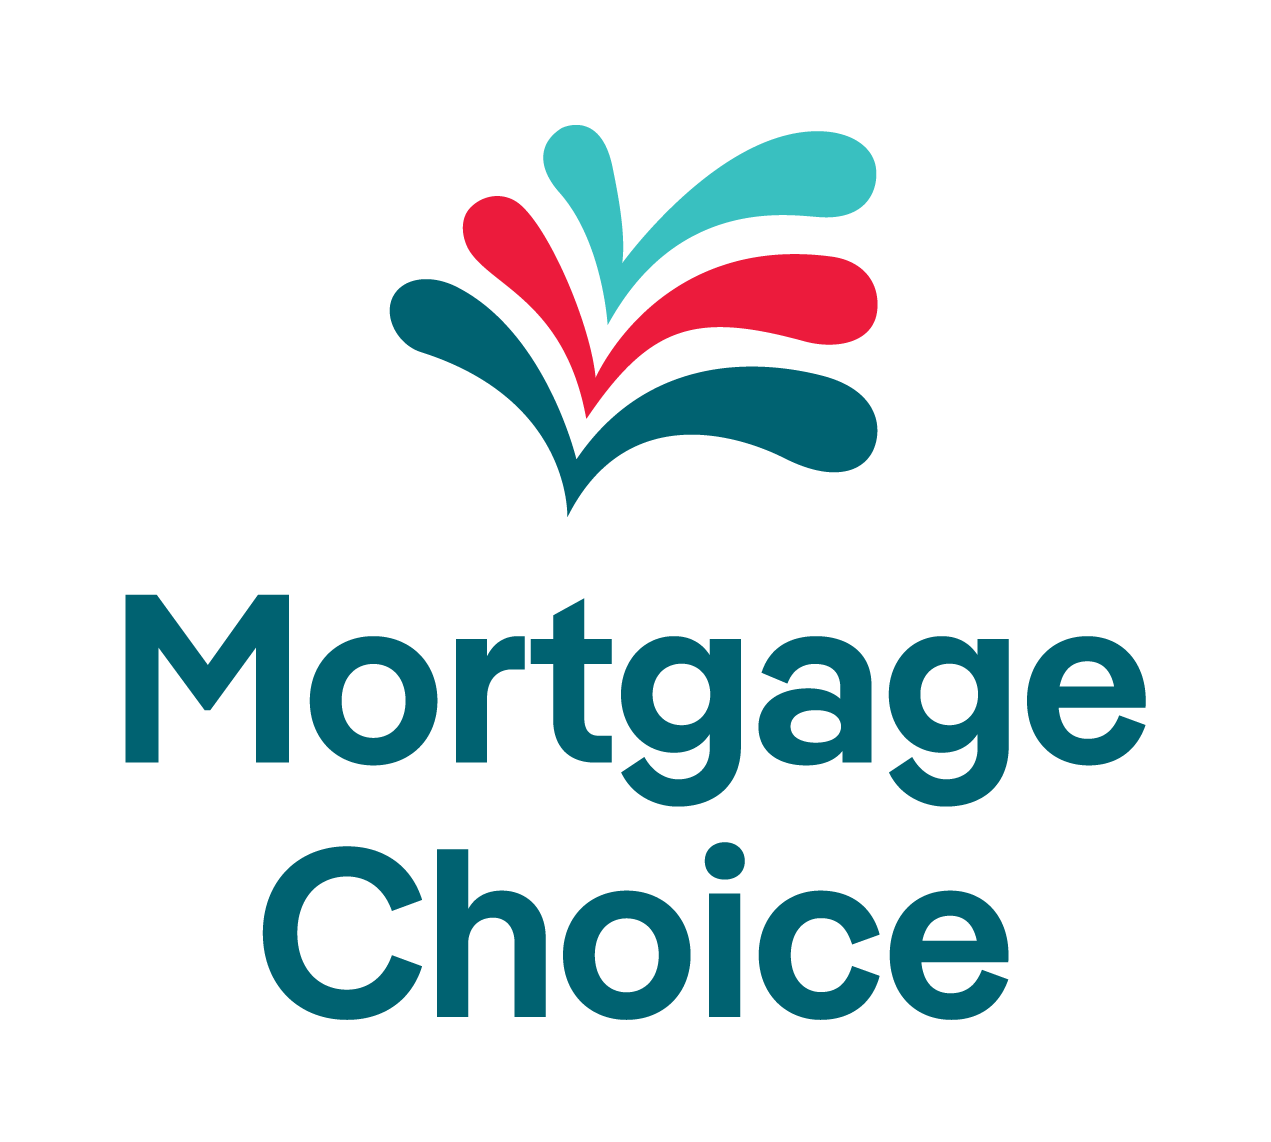 New mortgagechoice logo cmyk v stacked 002